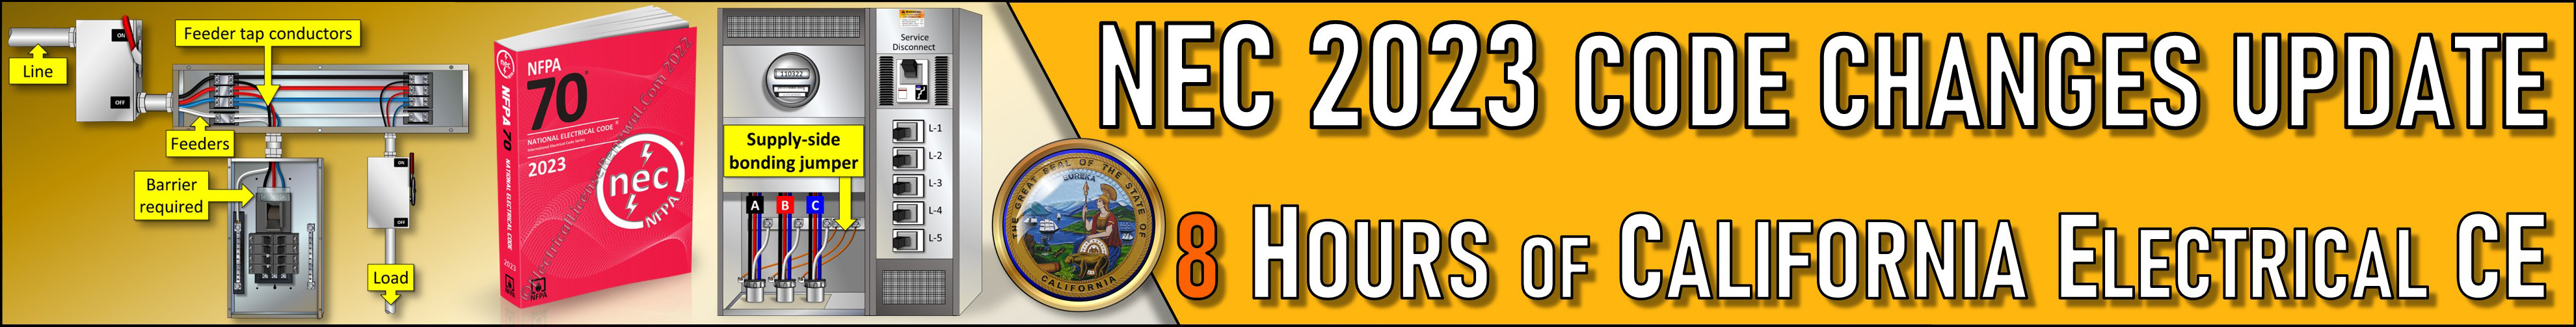 NEC 2023 Code Changes Update - 8 Hours Banner